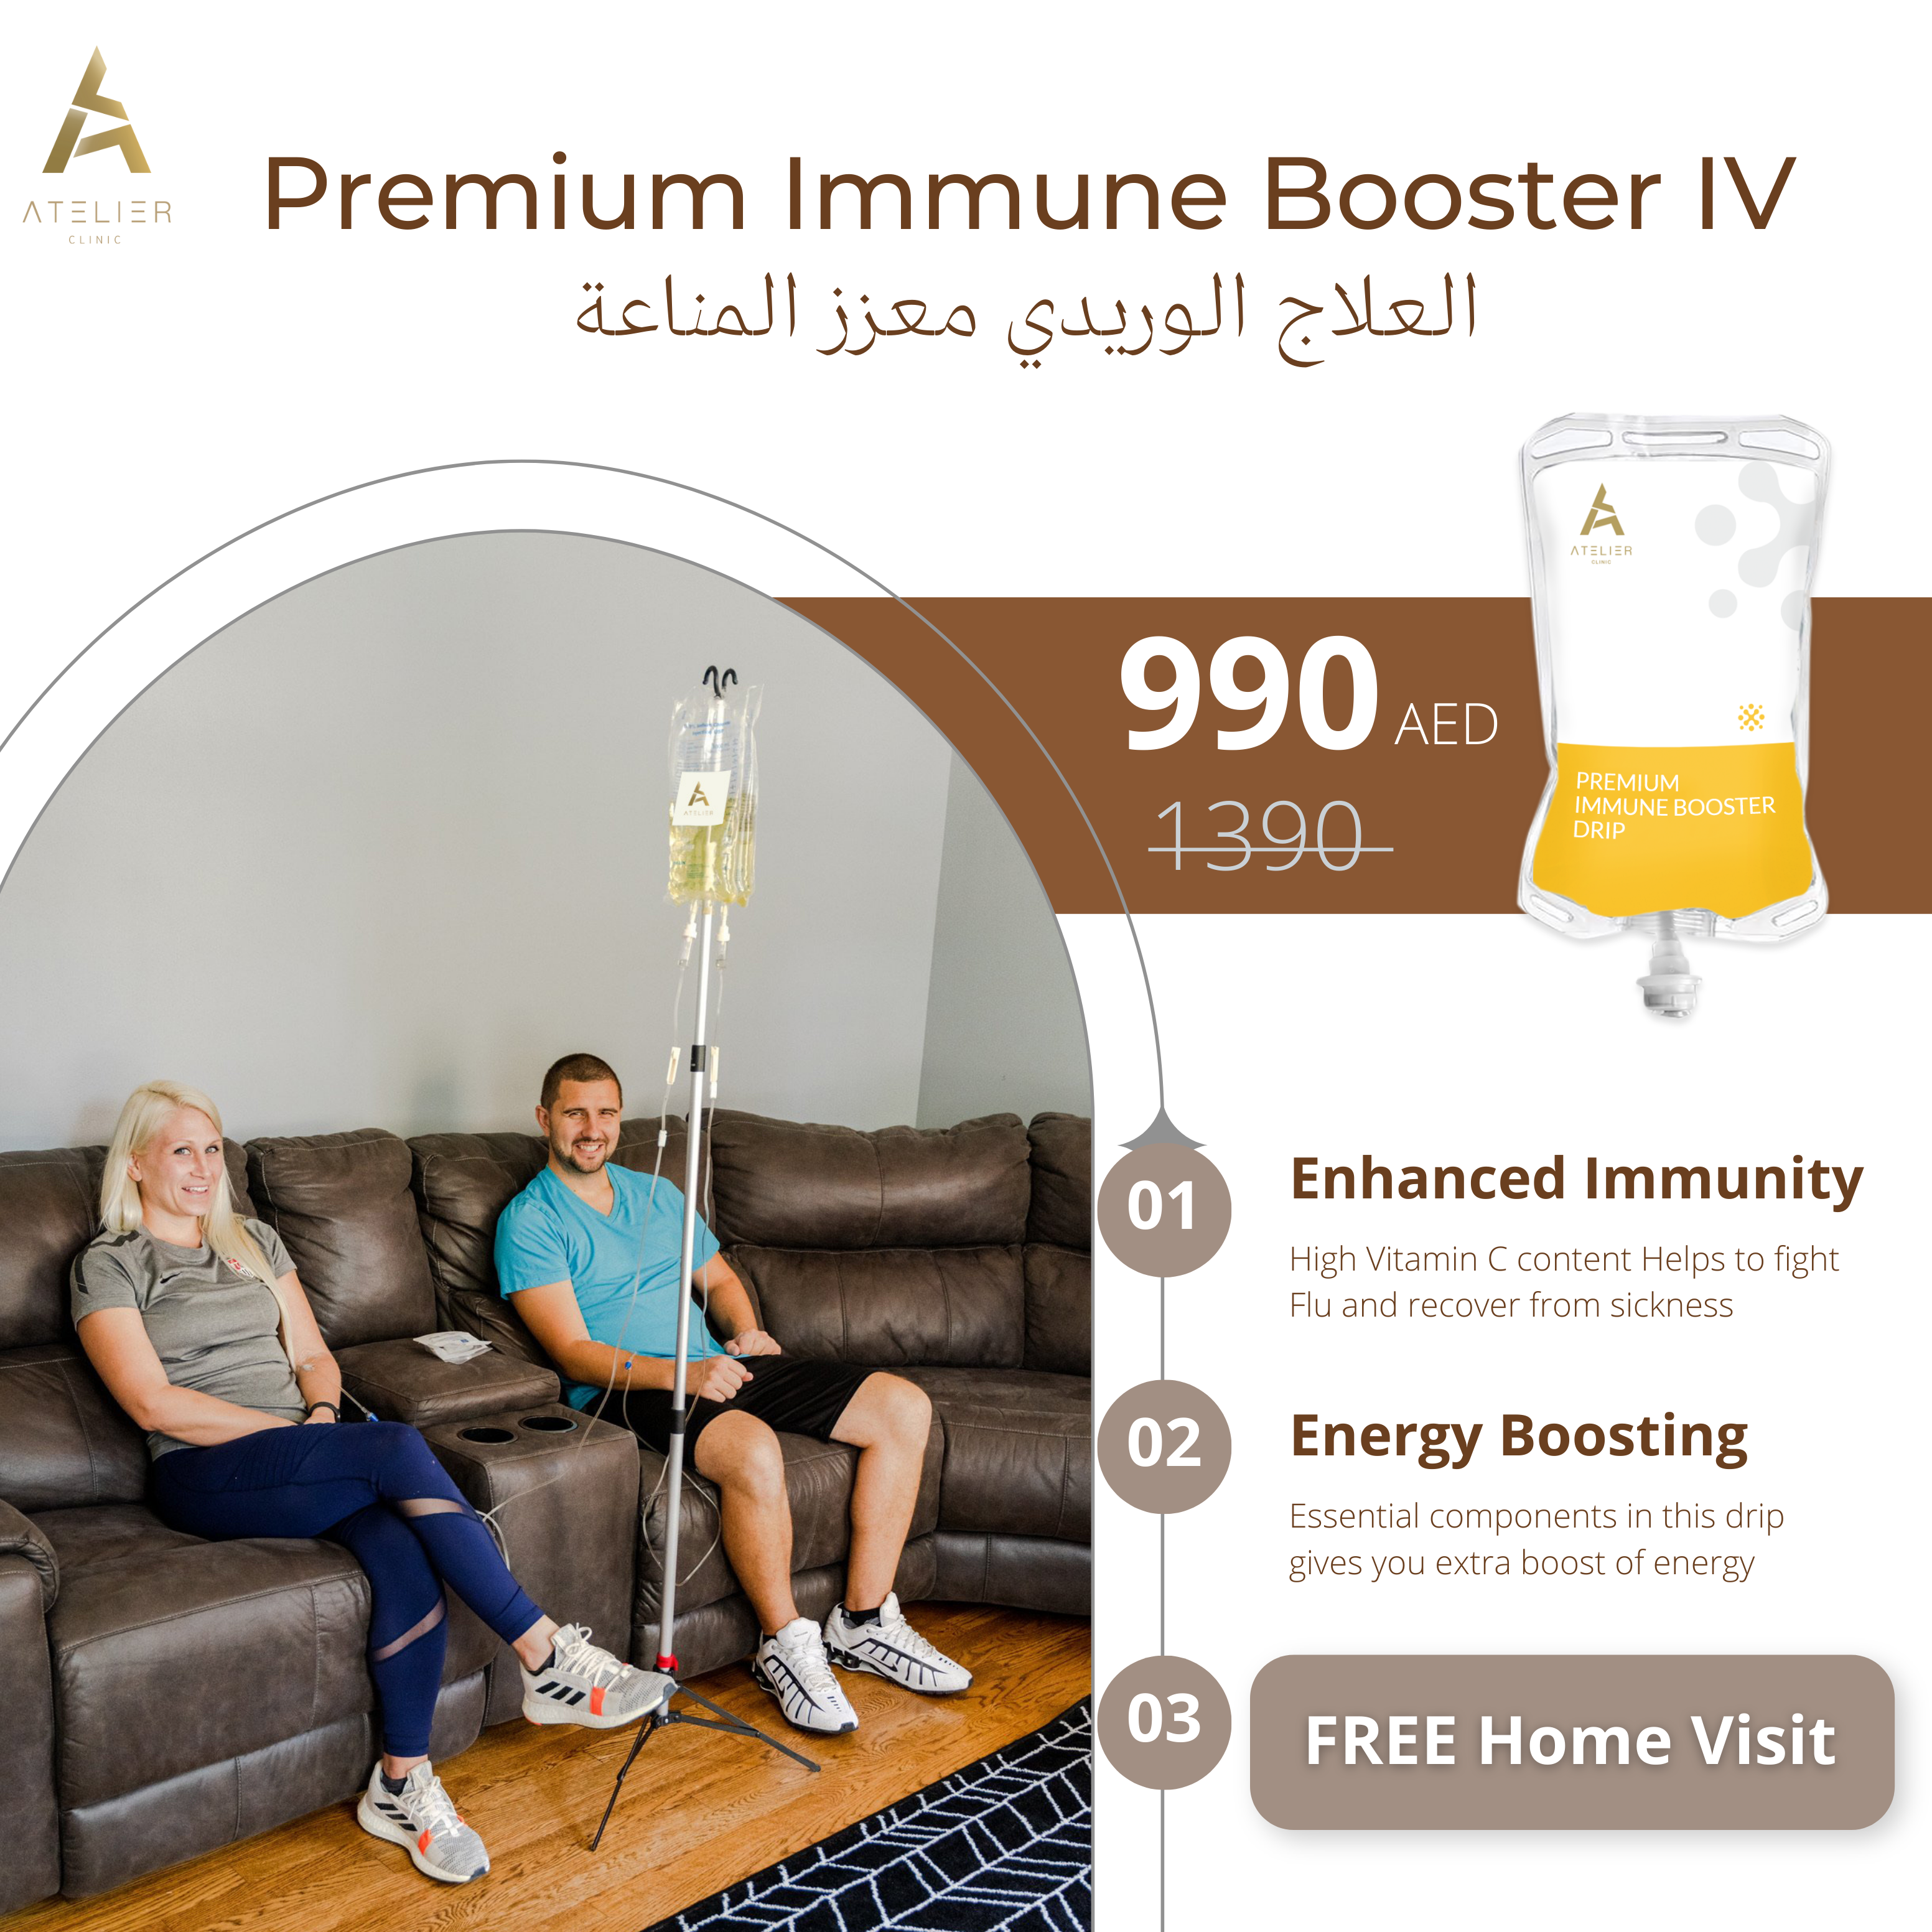 Premium Immune Booster IV Package